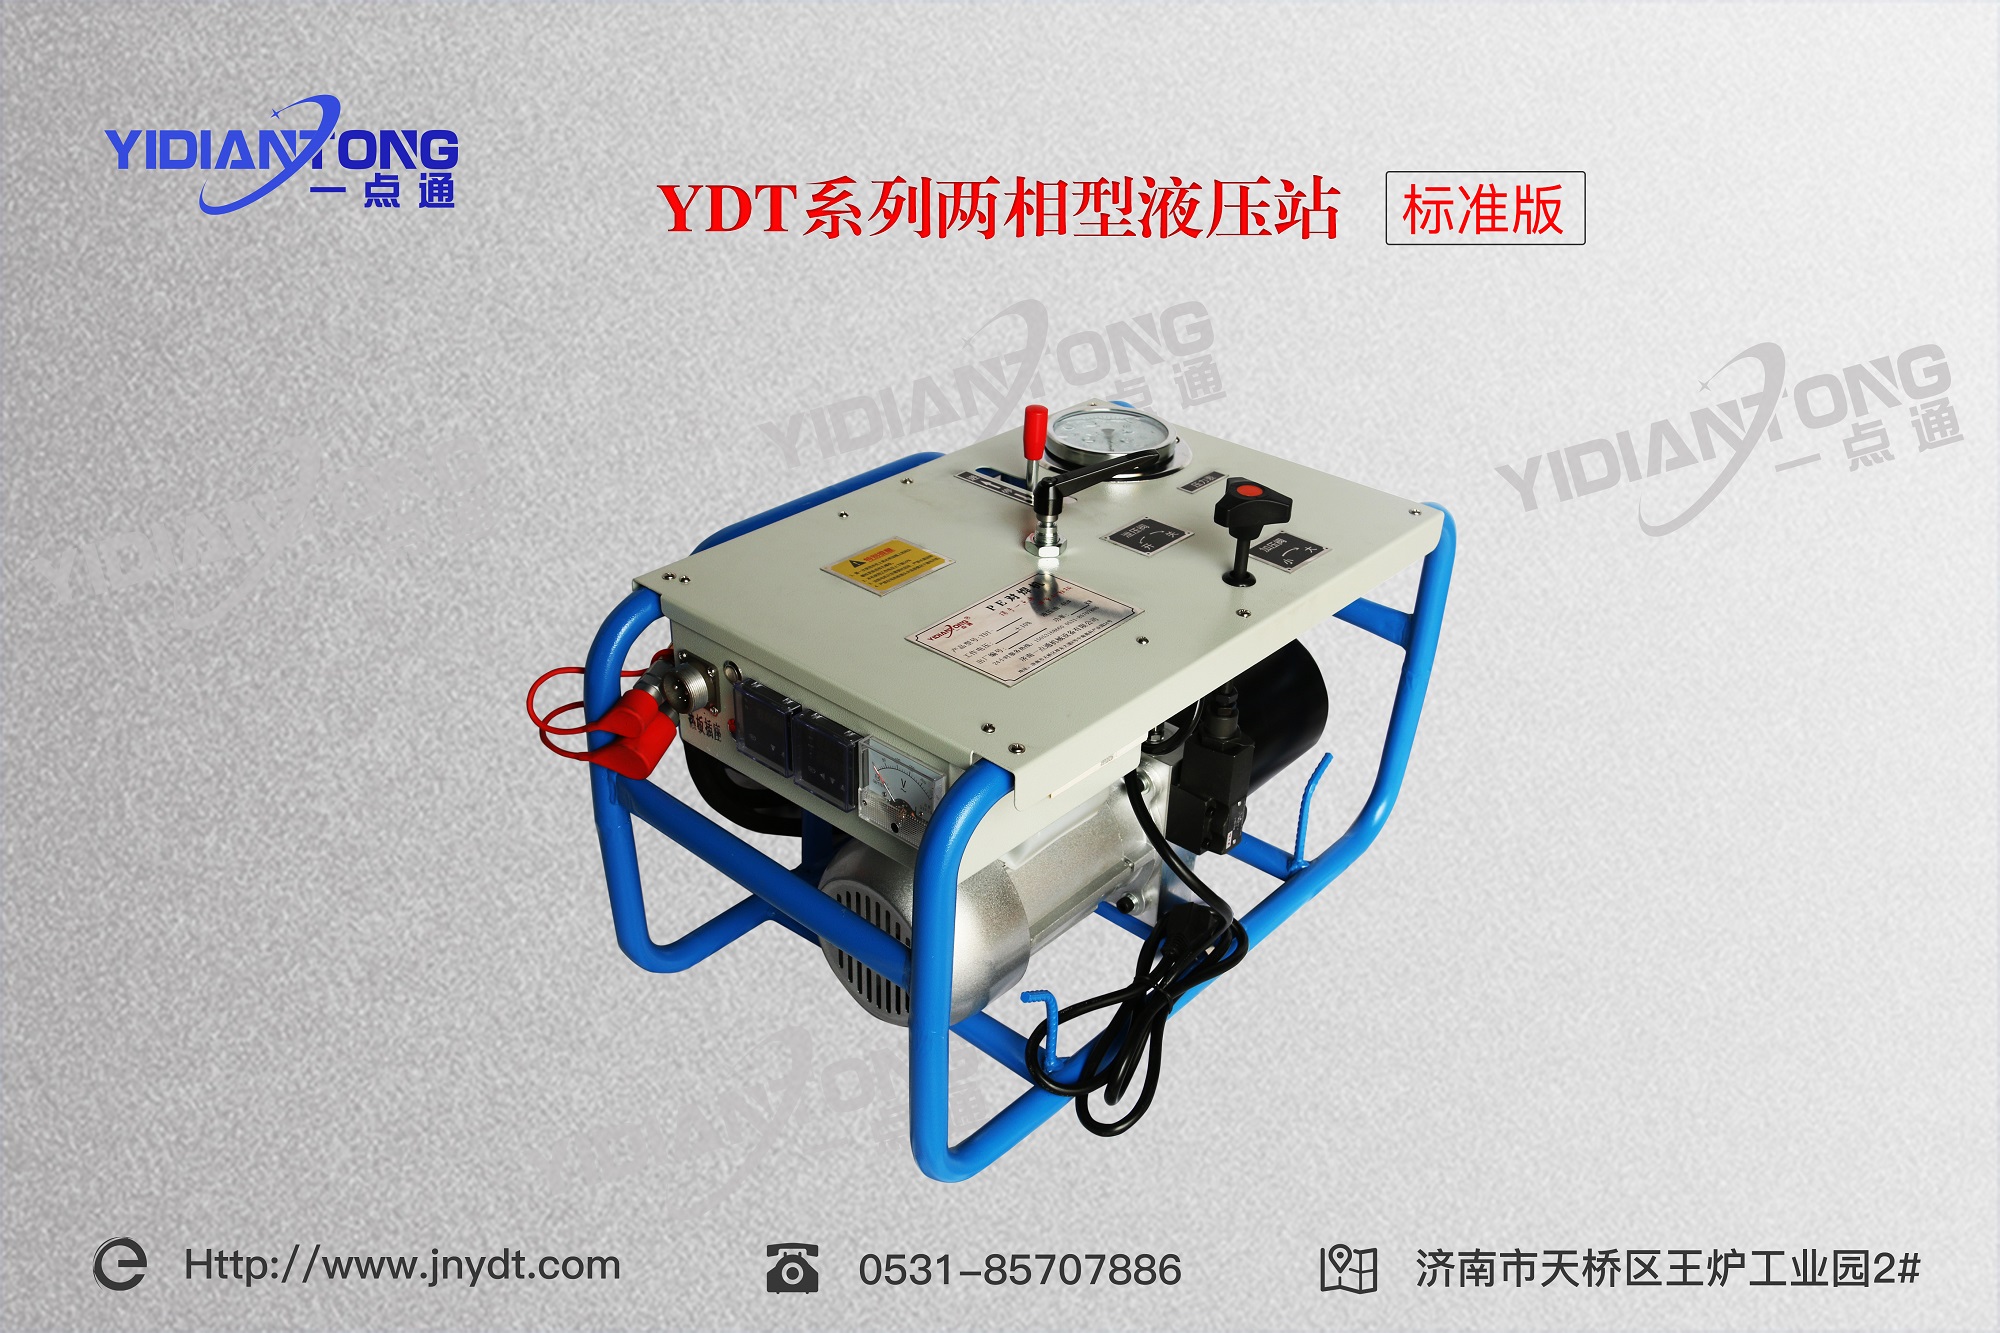 YDT系列两相型液压站